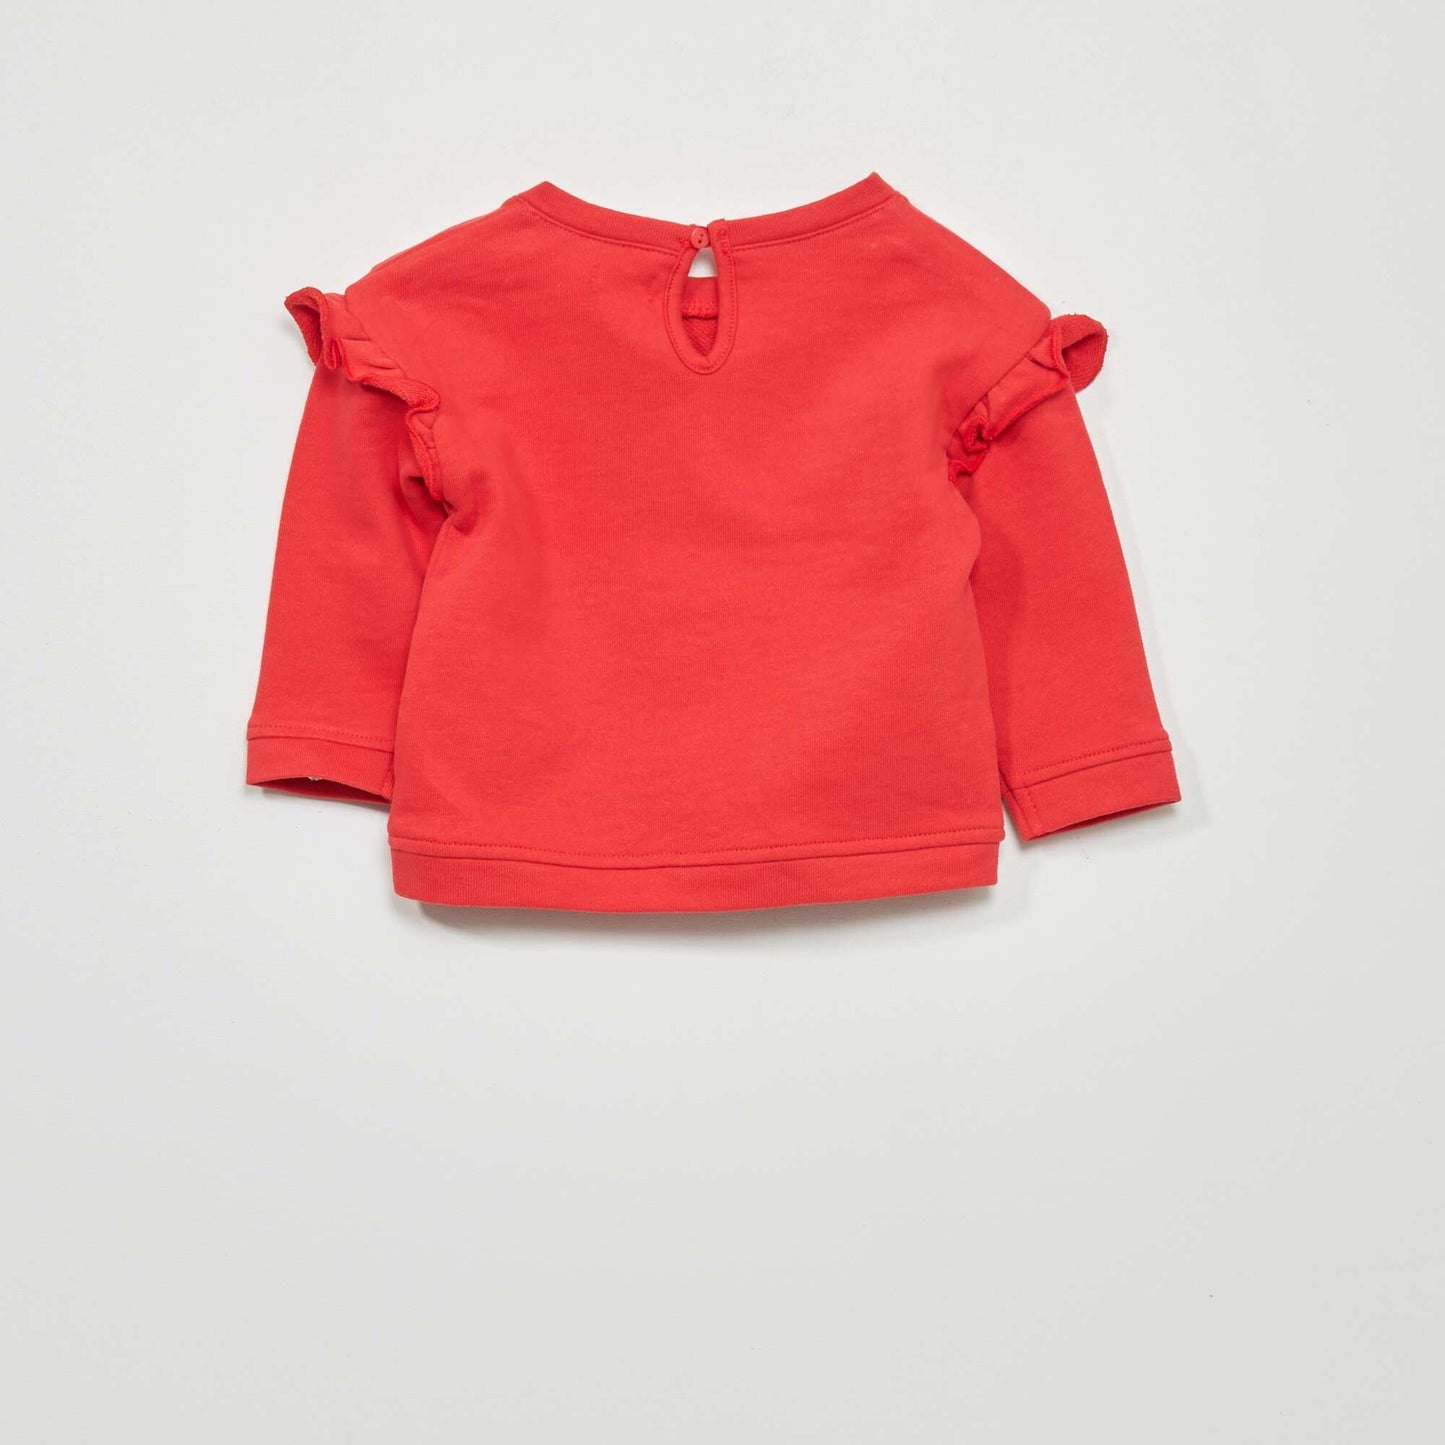 Sweatshirt fabric sweater with ruffles RED